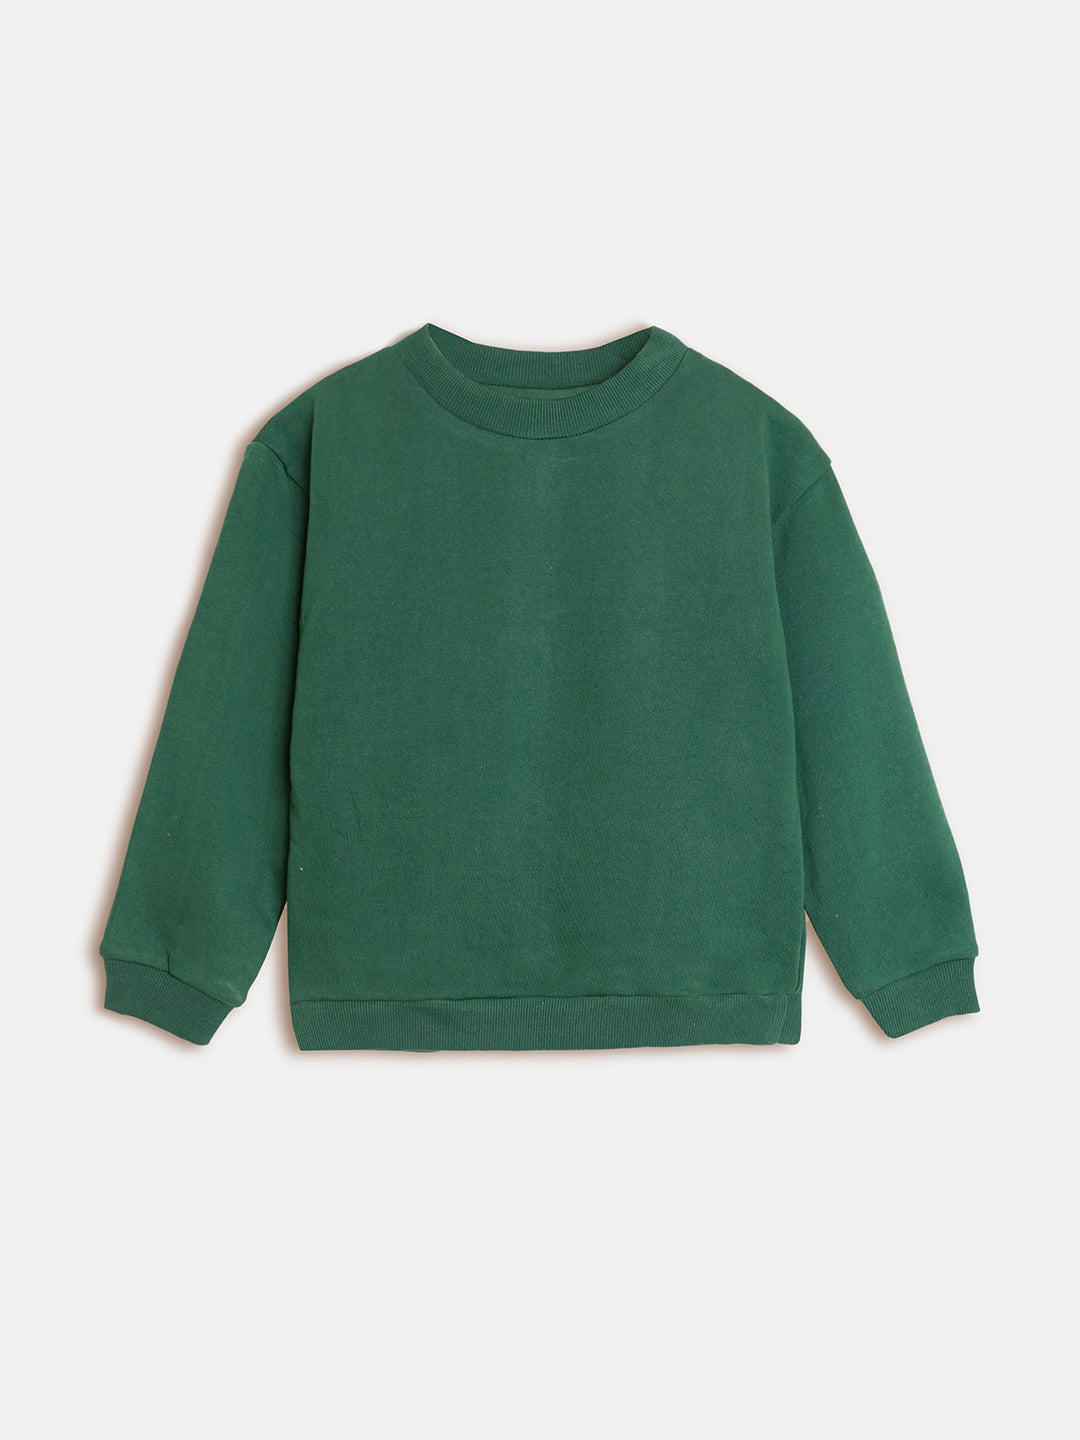 Green solid light weight sweatshirt